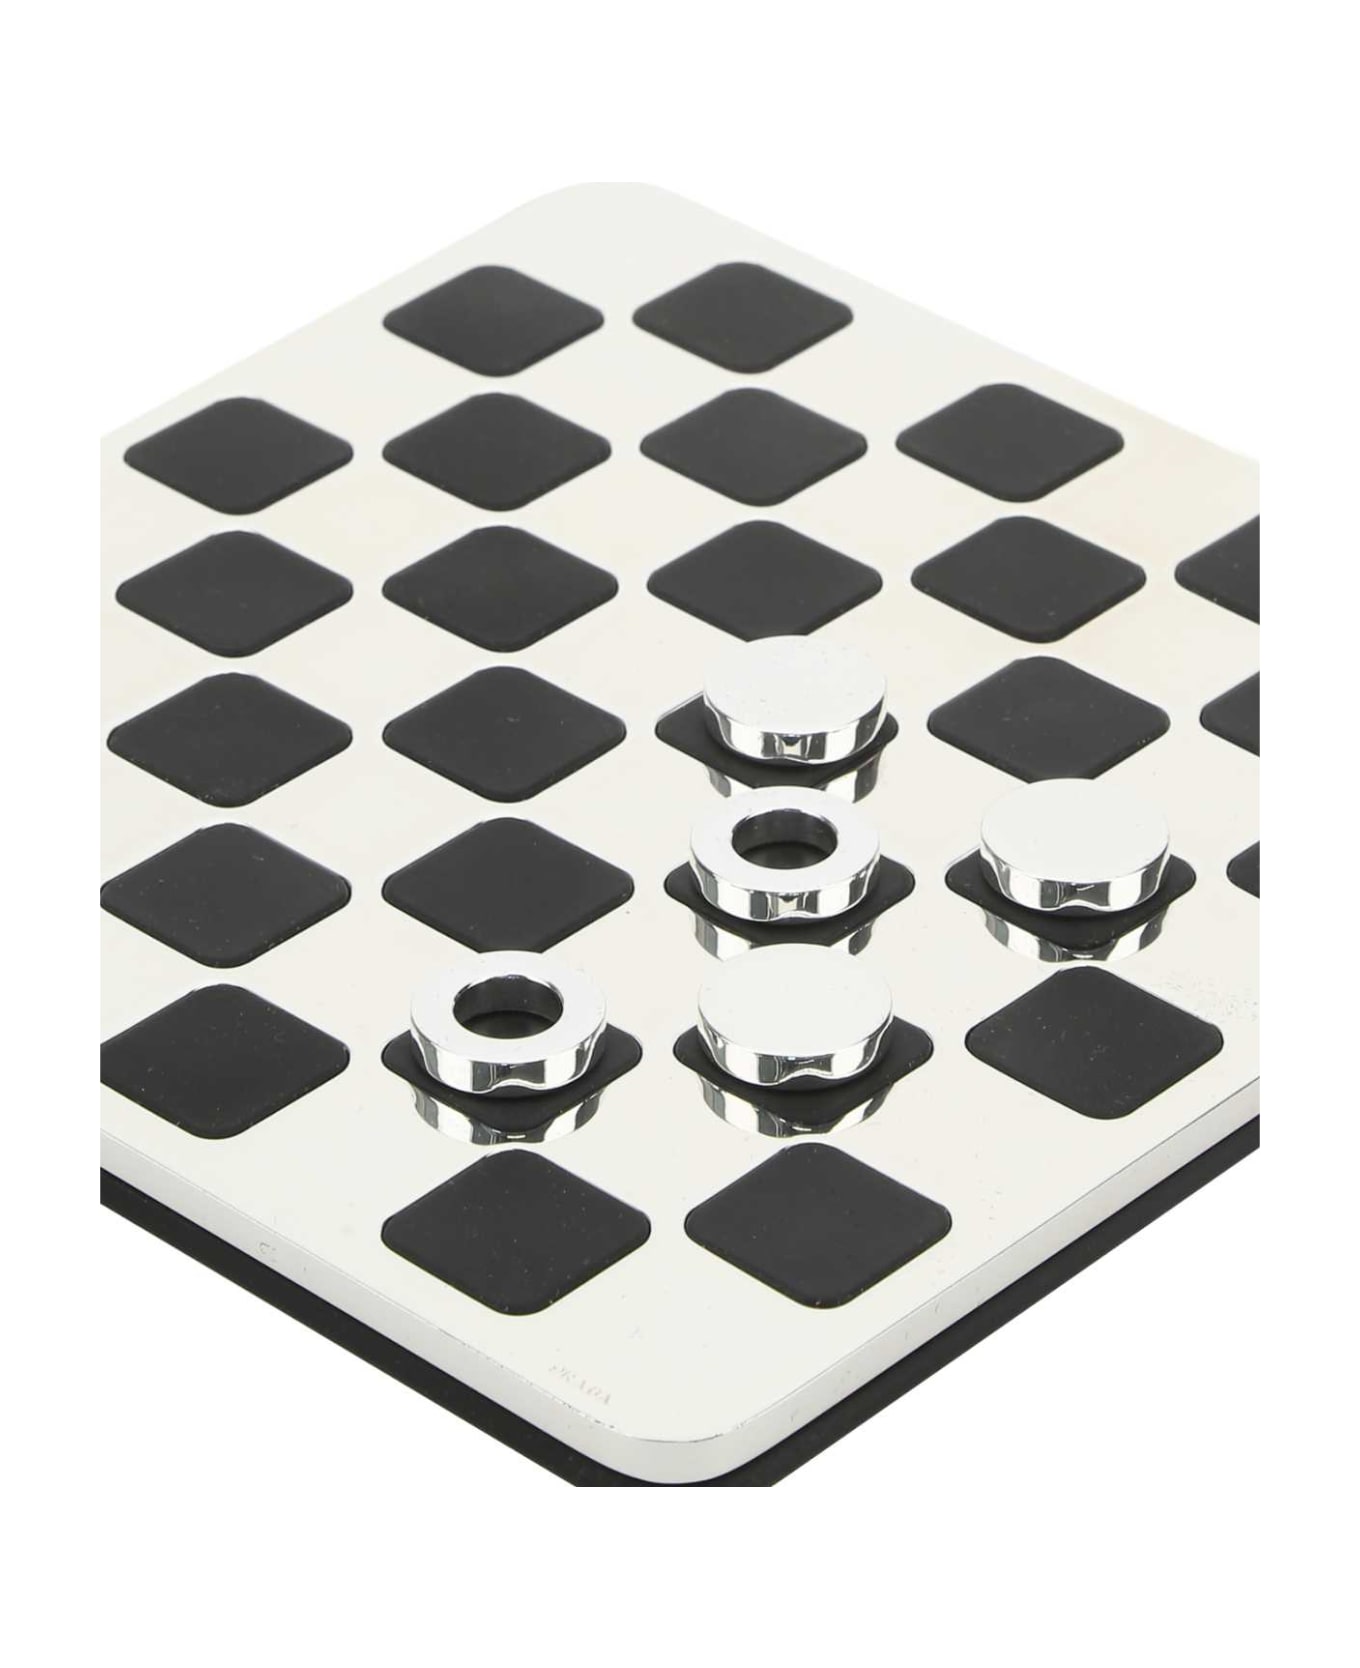 prada Festival Checkers Game Kit - NERO